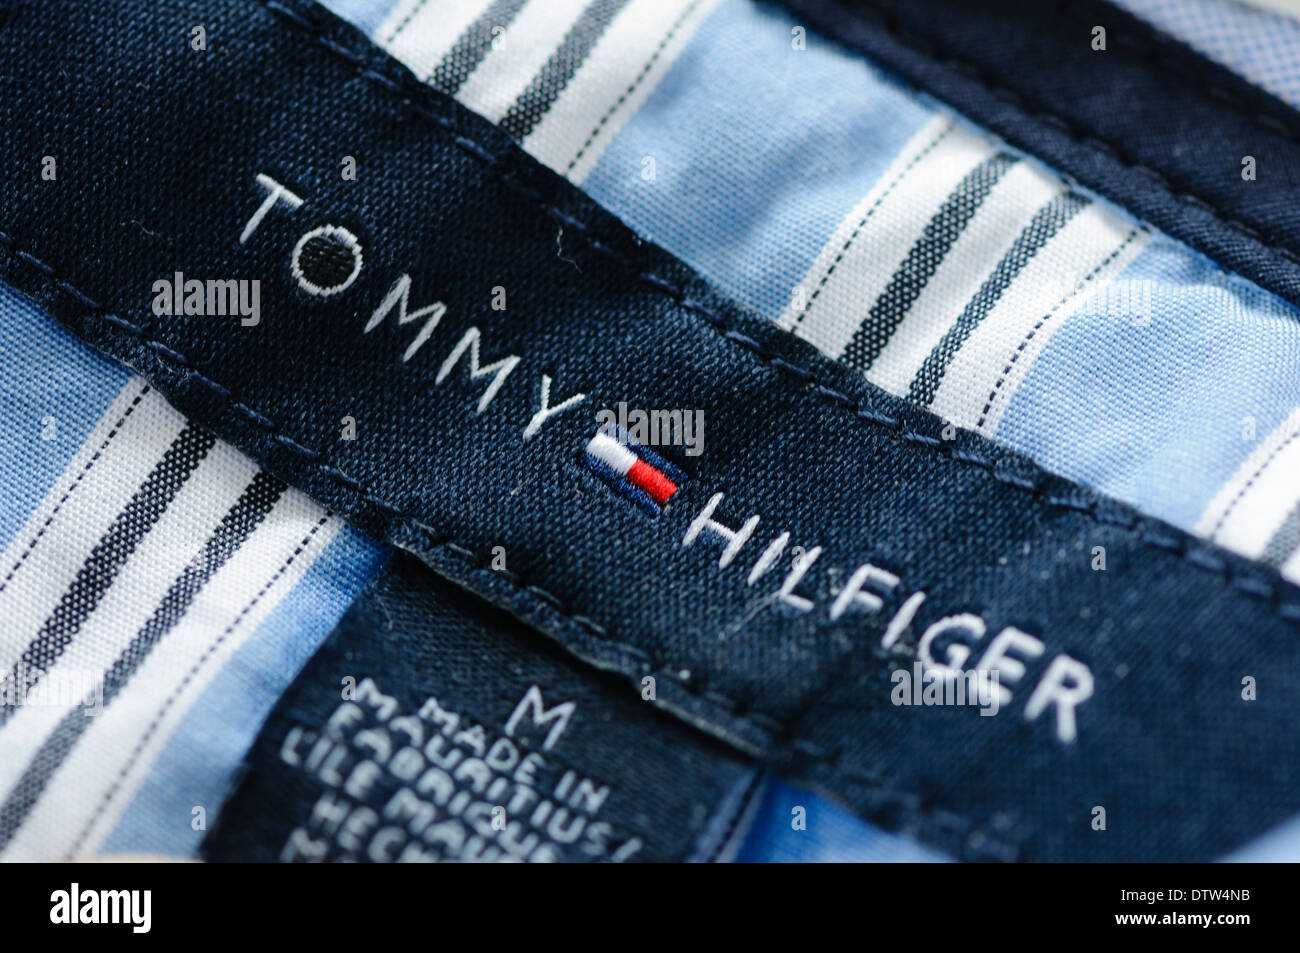 Label on a Tommy Hilfiger men's shirt Stock Photo - Alamy